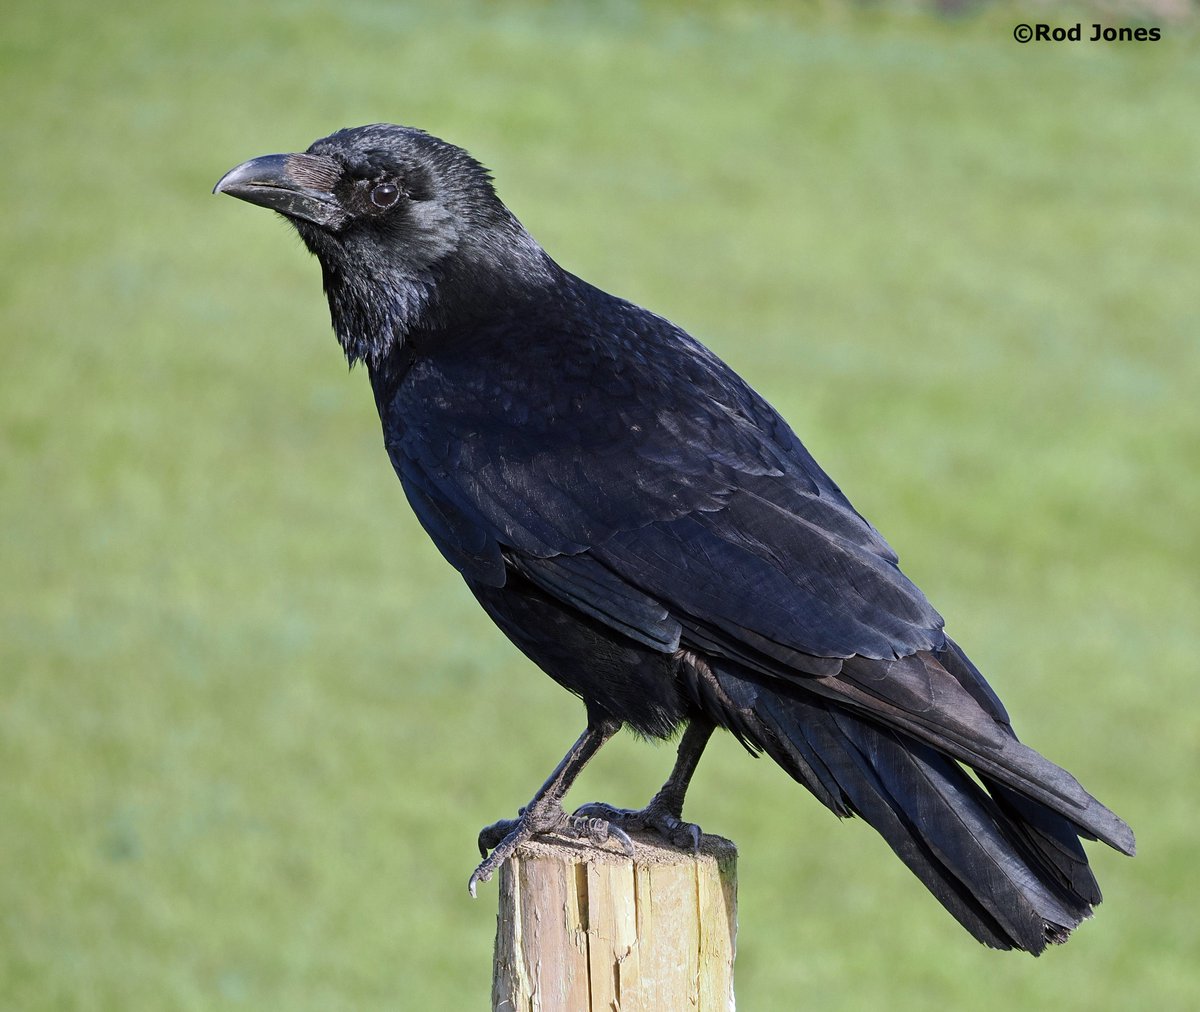 Raven in Shelf Woods, Halifax. #ThePhotoHour #TwitterNaturePhotography #corvids #wildlifephotography #nature #BirdsOfTwitter